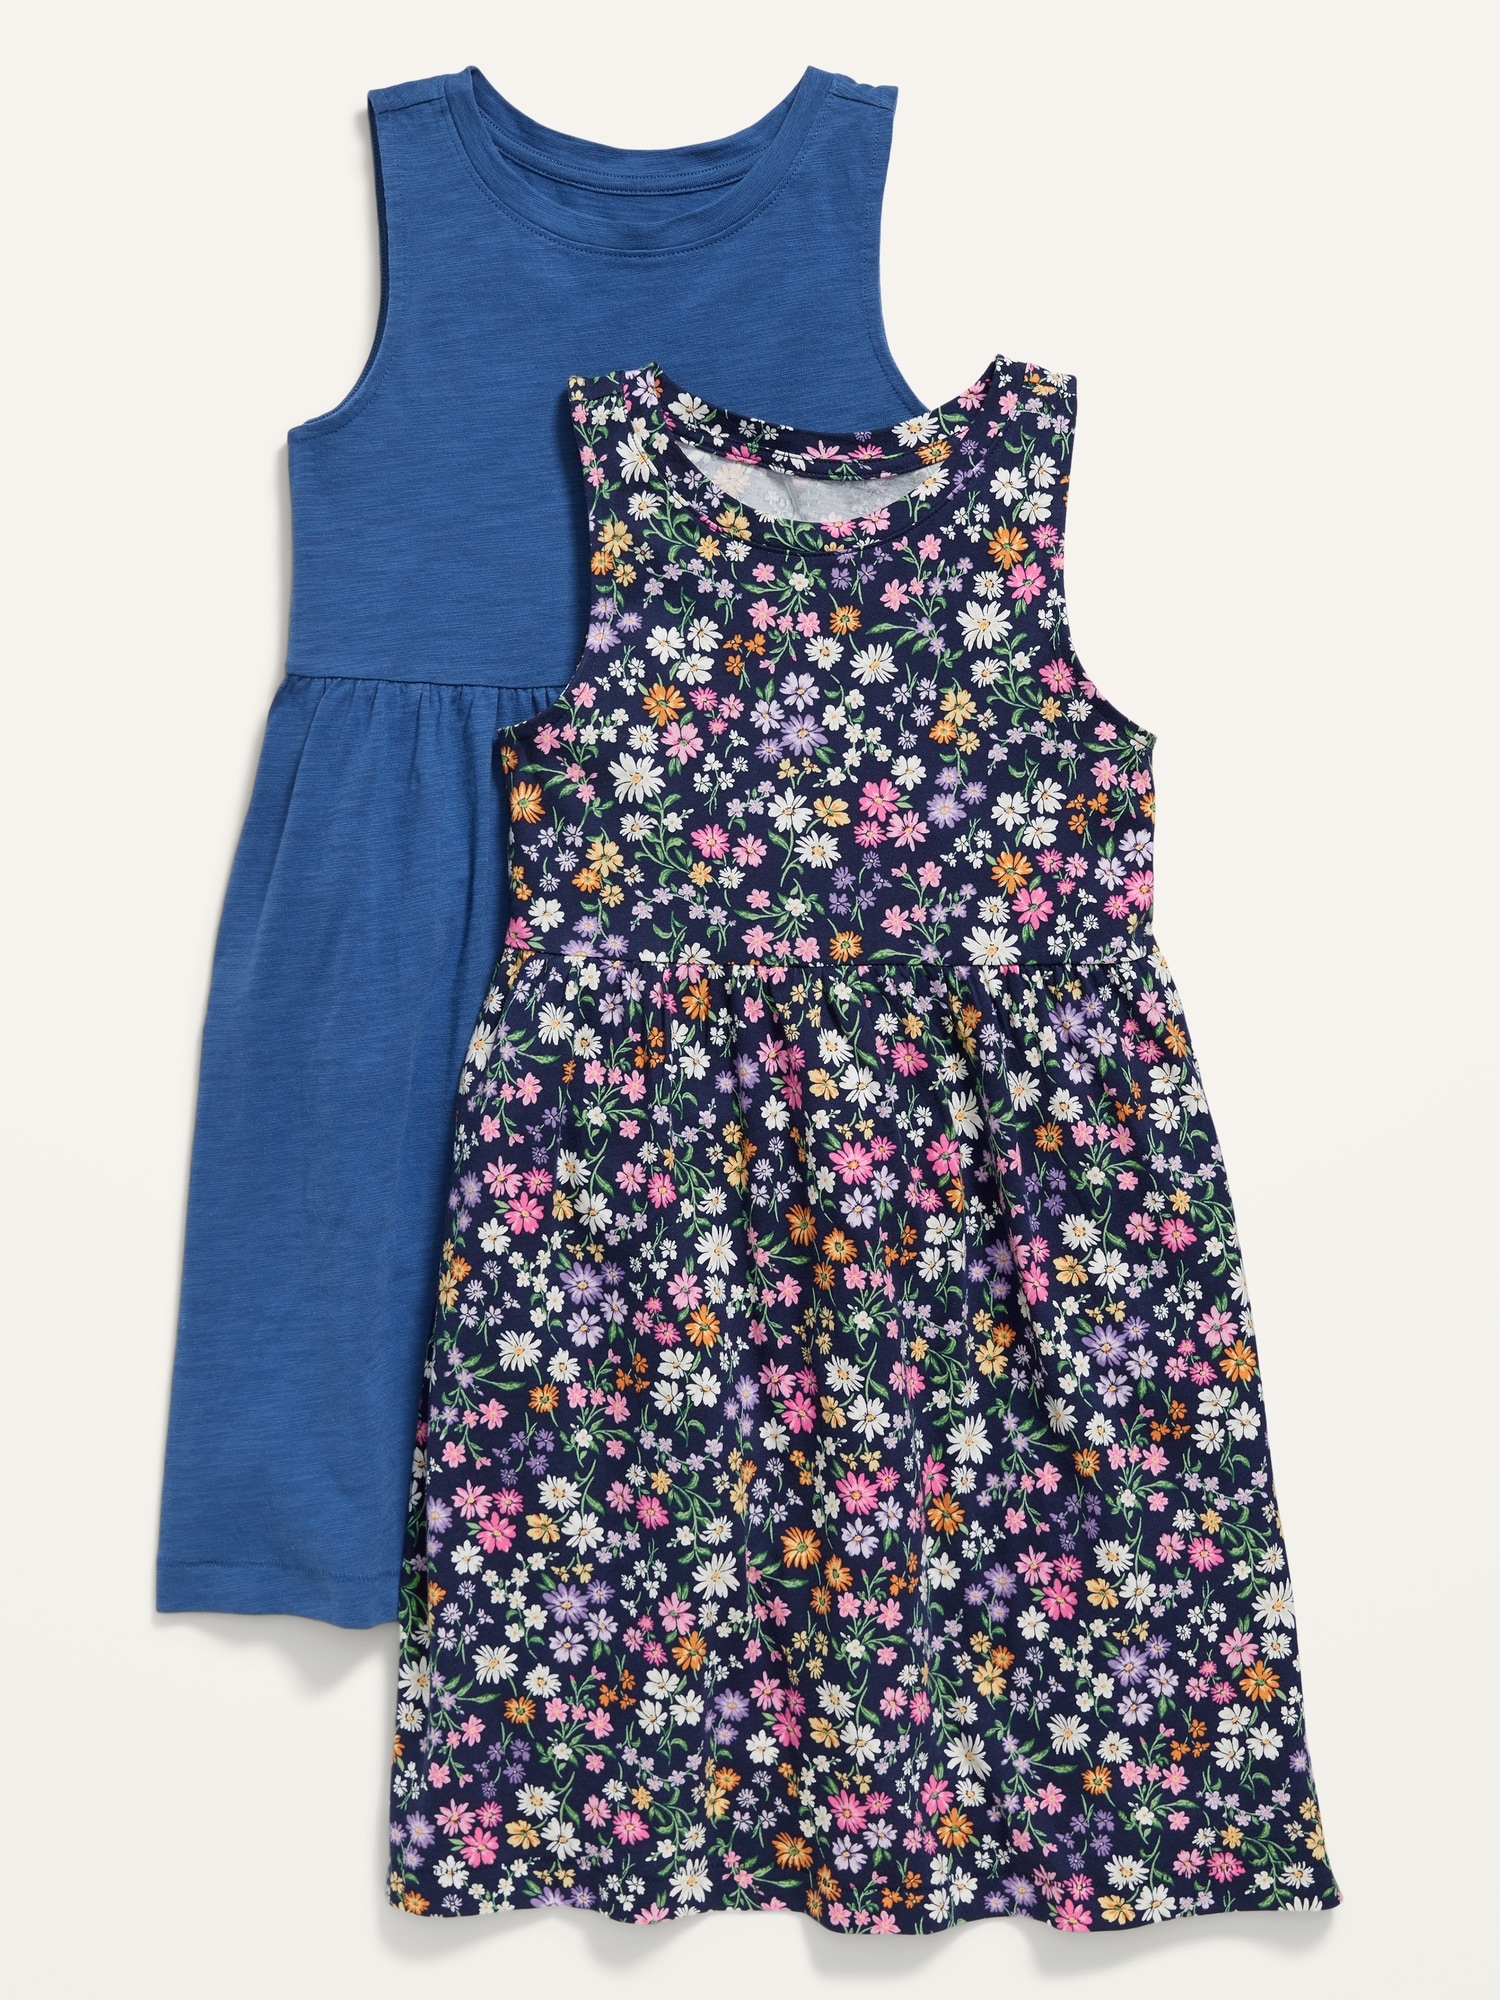 Oldnavy Sleeveless Jersey-Knit Printed Dress 2-Pack for Girls